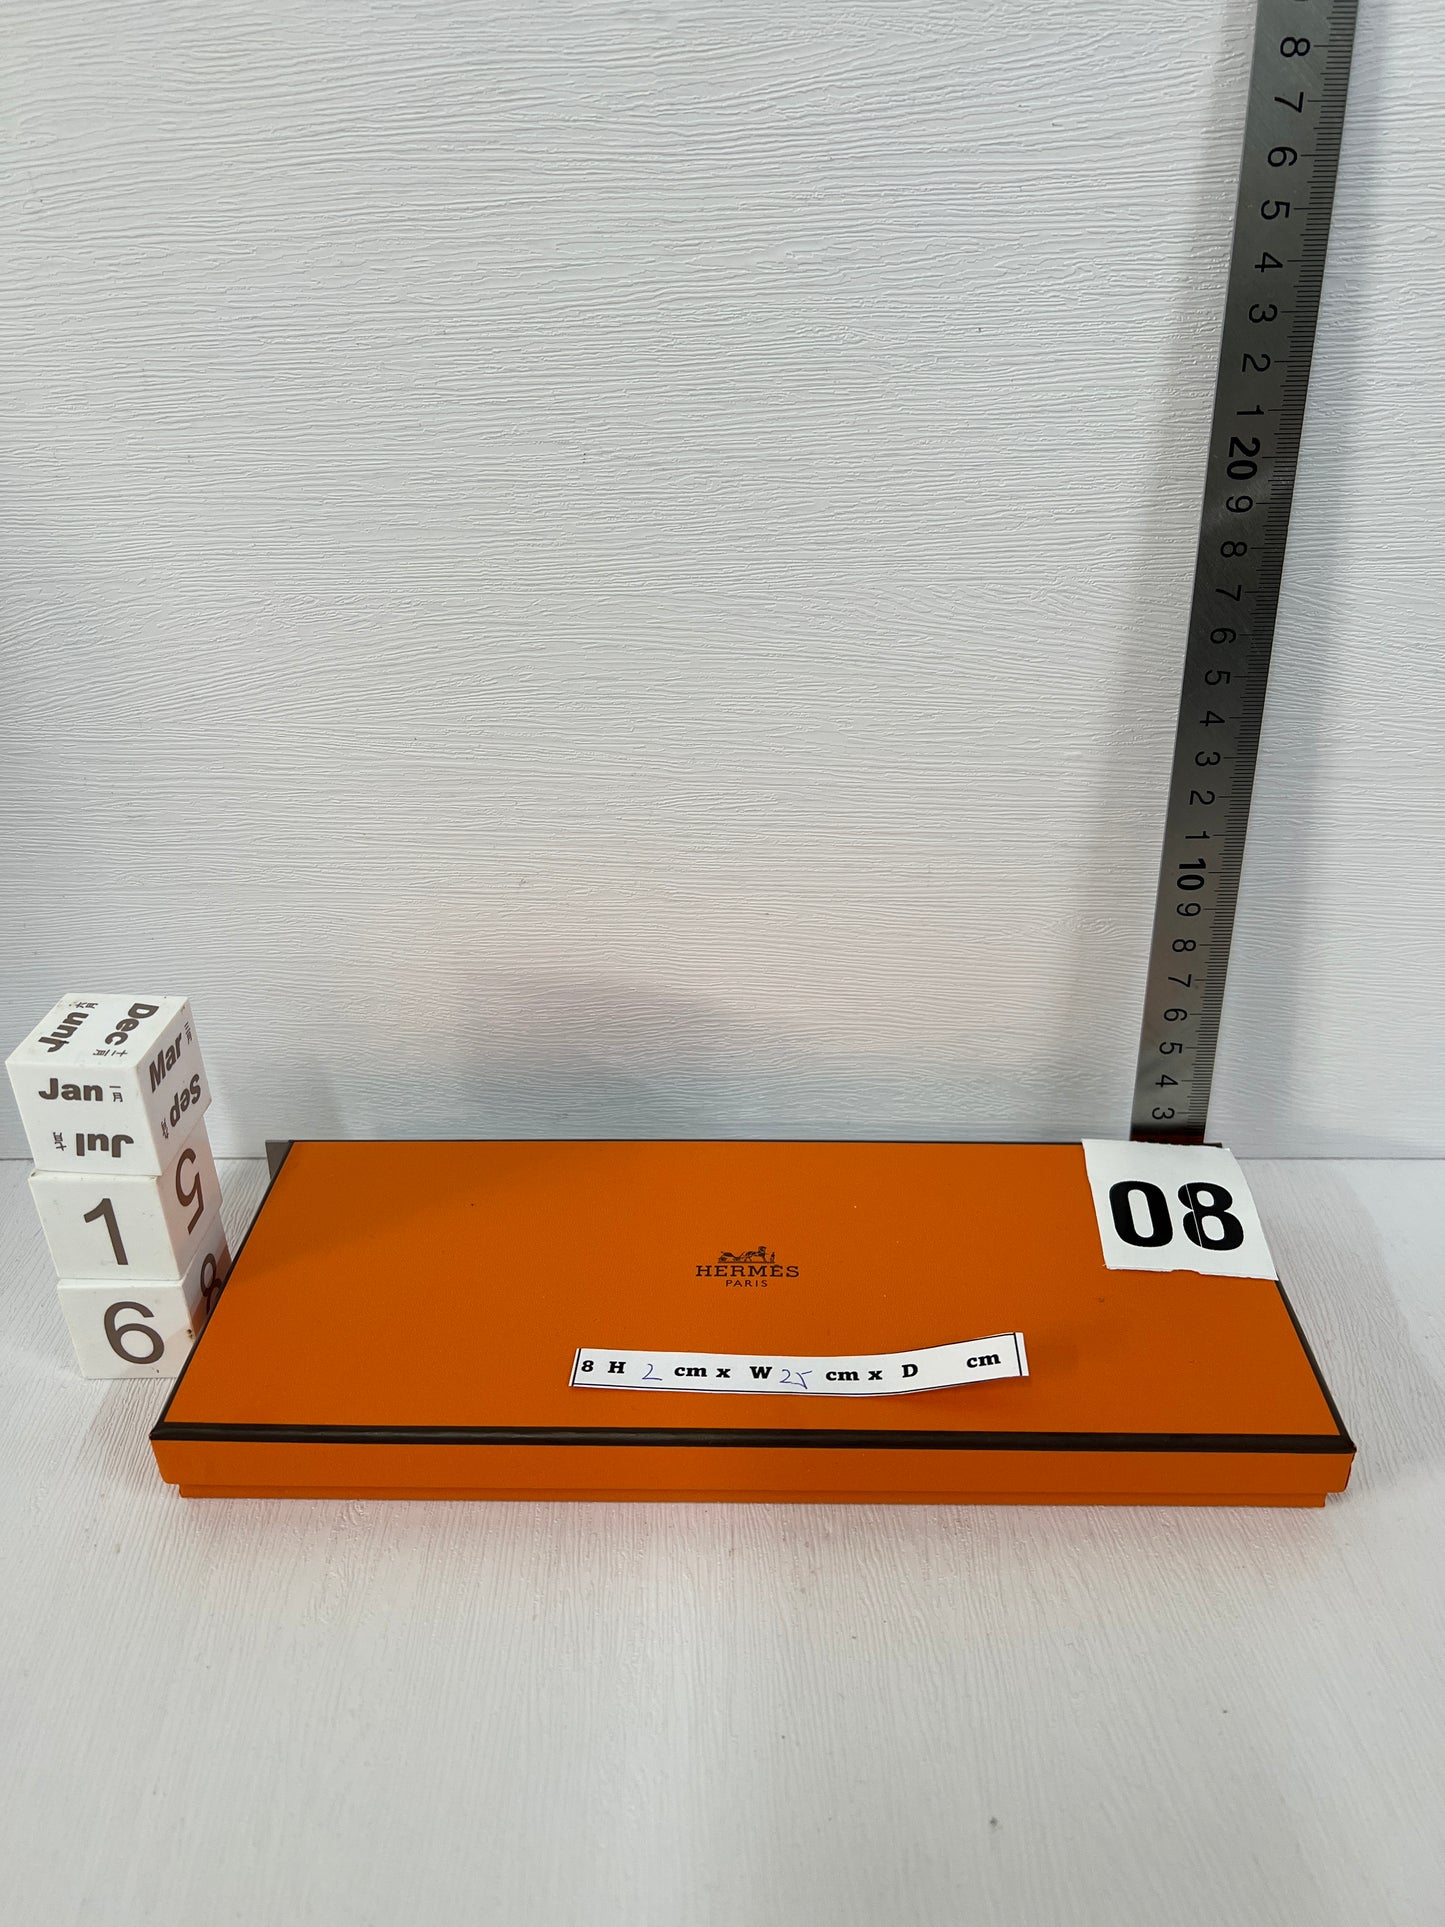 Hermes Orange Box, storage Jewellery Gift Box Ideas wallet necklace bracelet - 16 Jan 2023